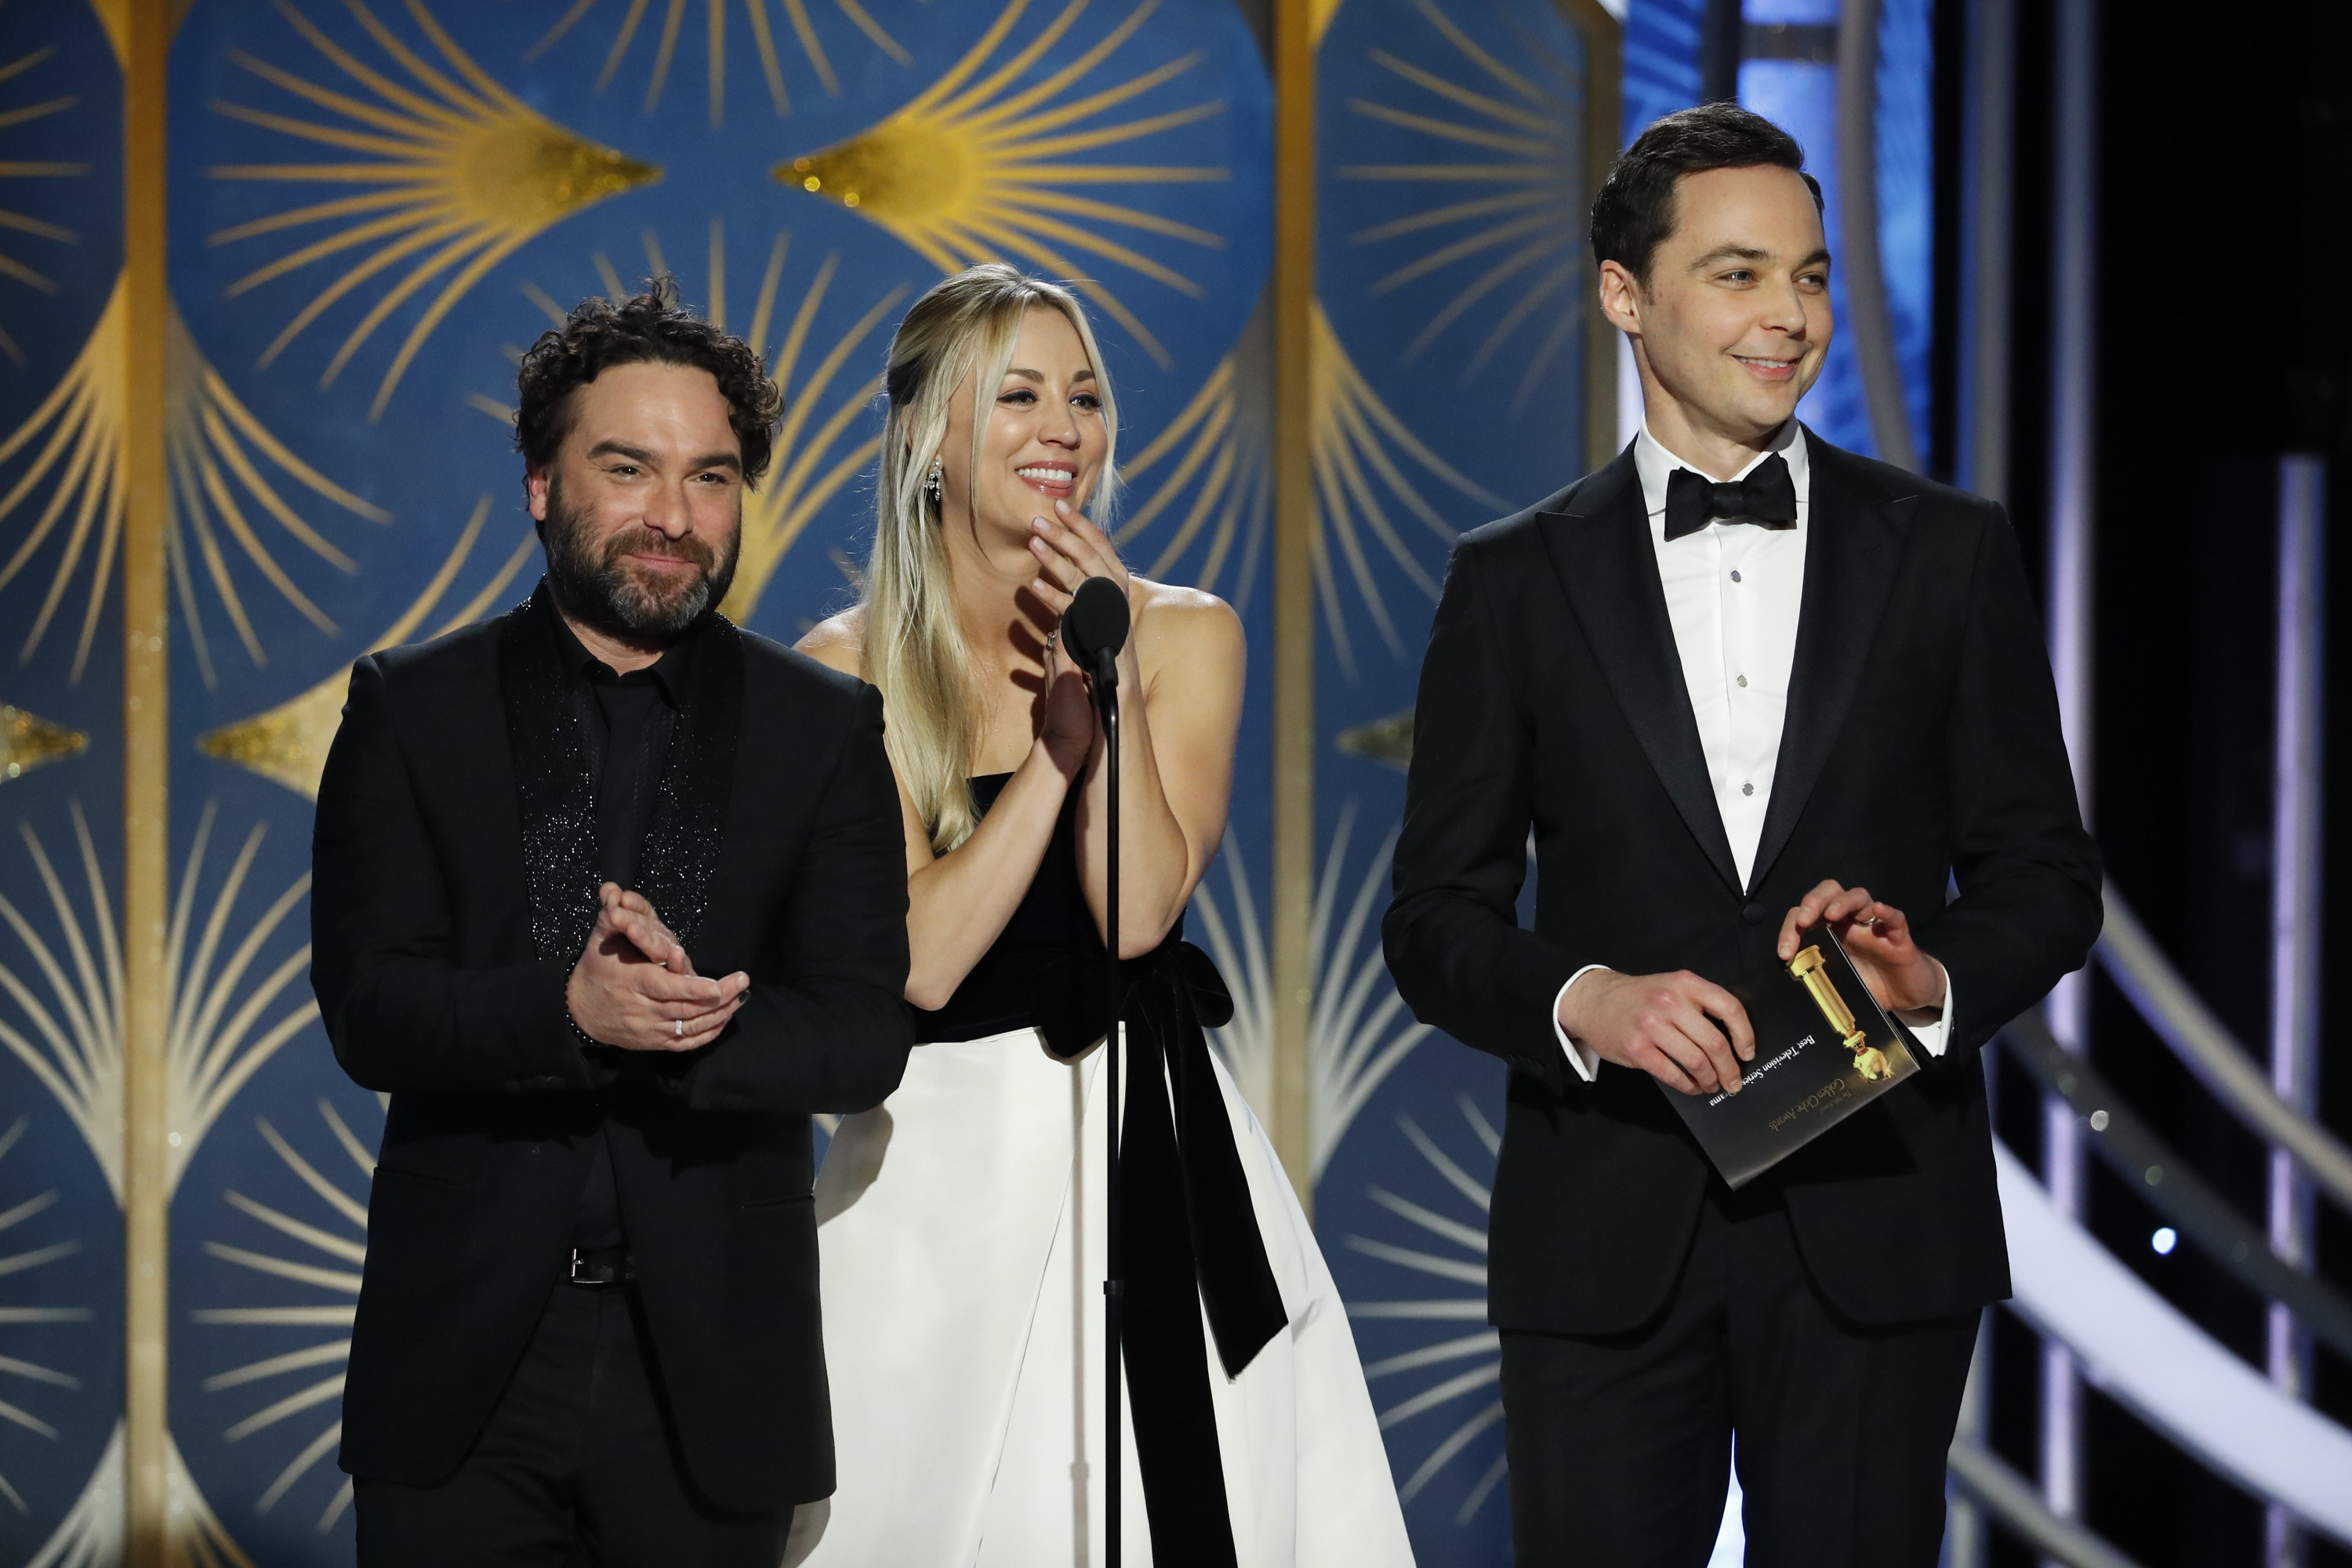 Johnny, Kaley, and Jim presenting an award